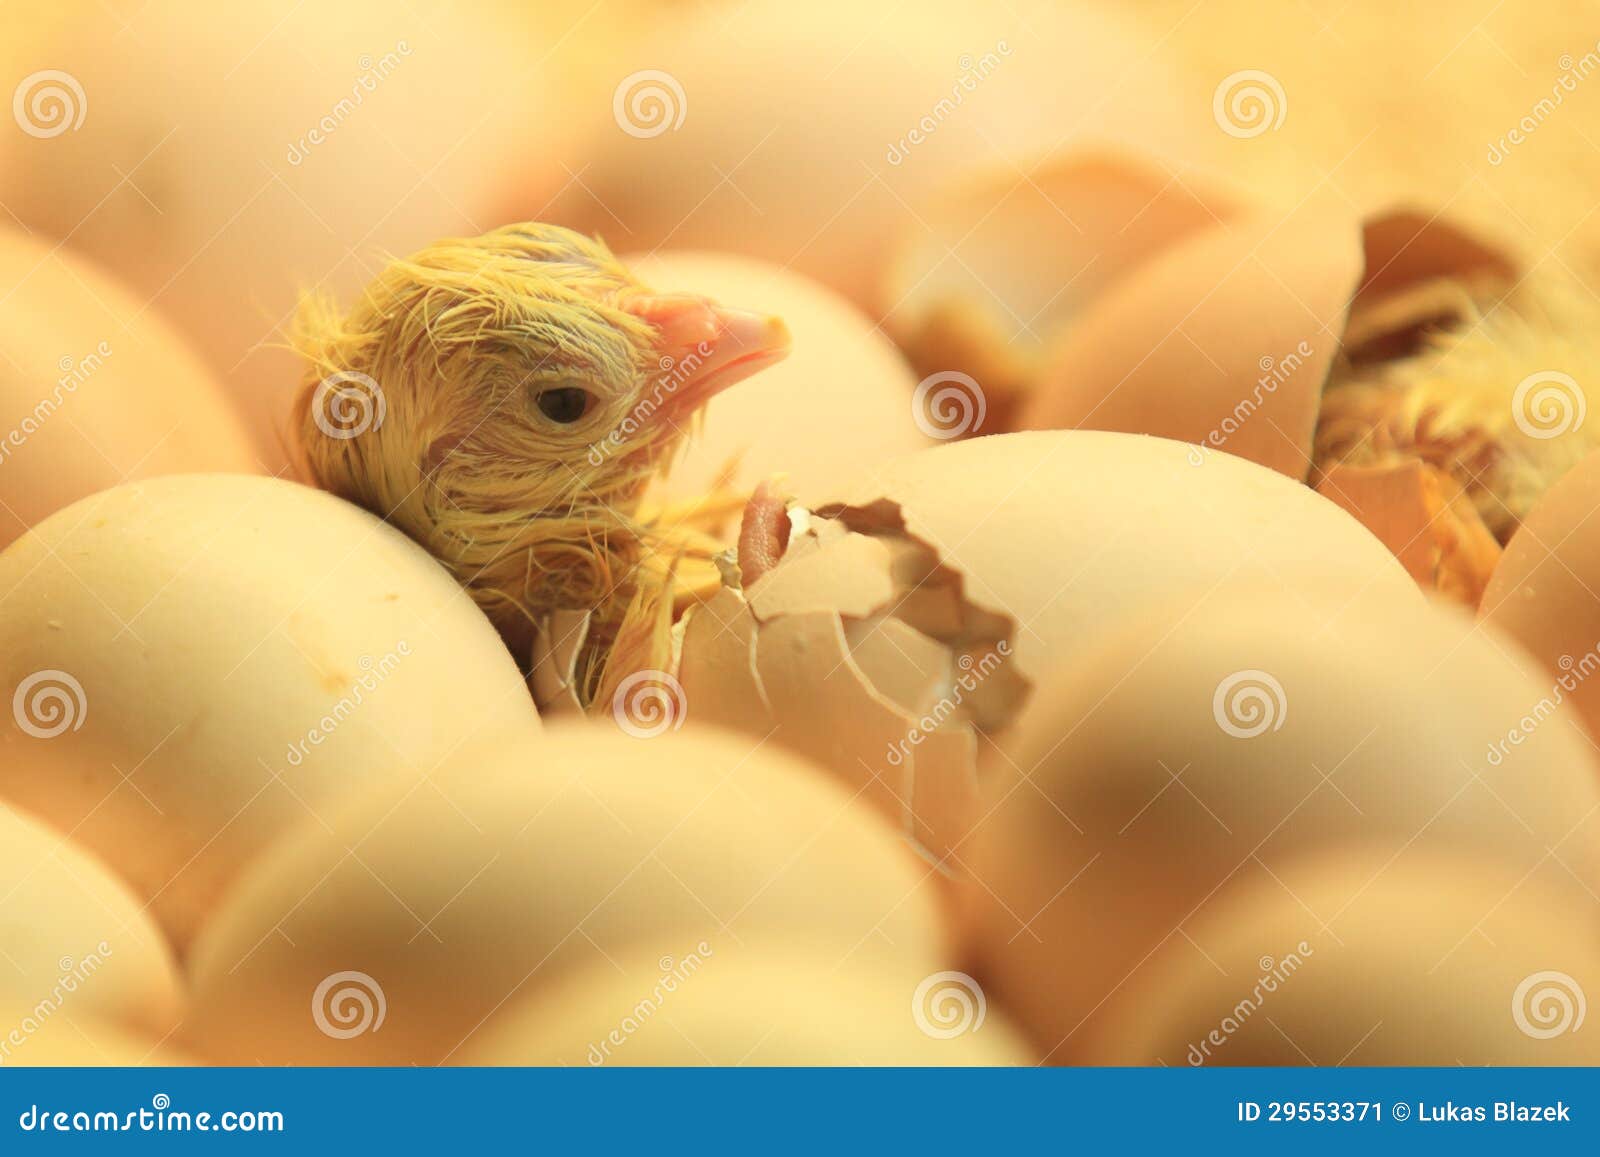 Hatching Chicken Stock Image - Image: 29553371